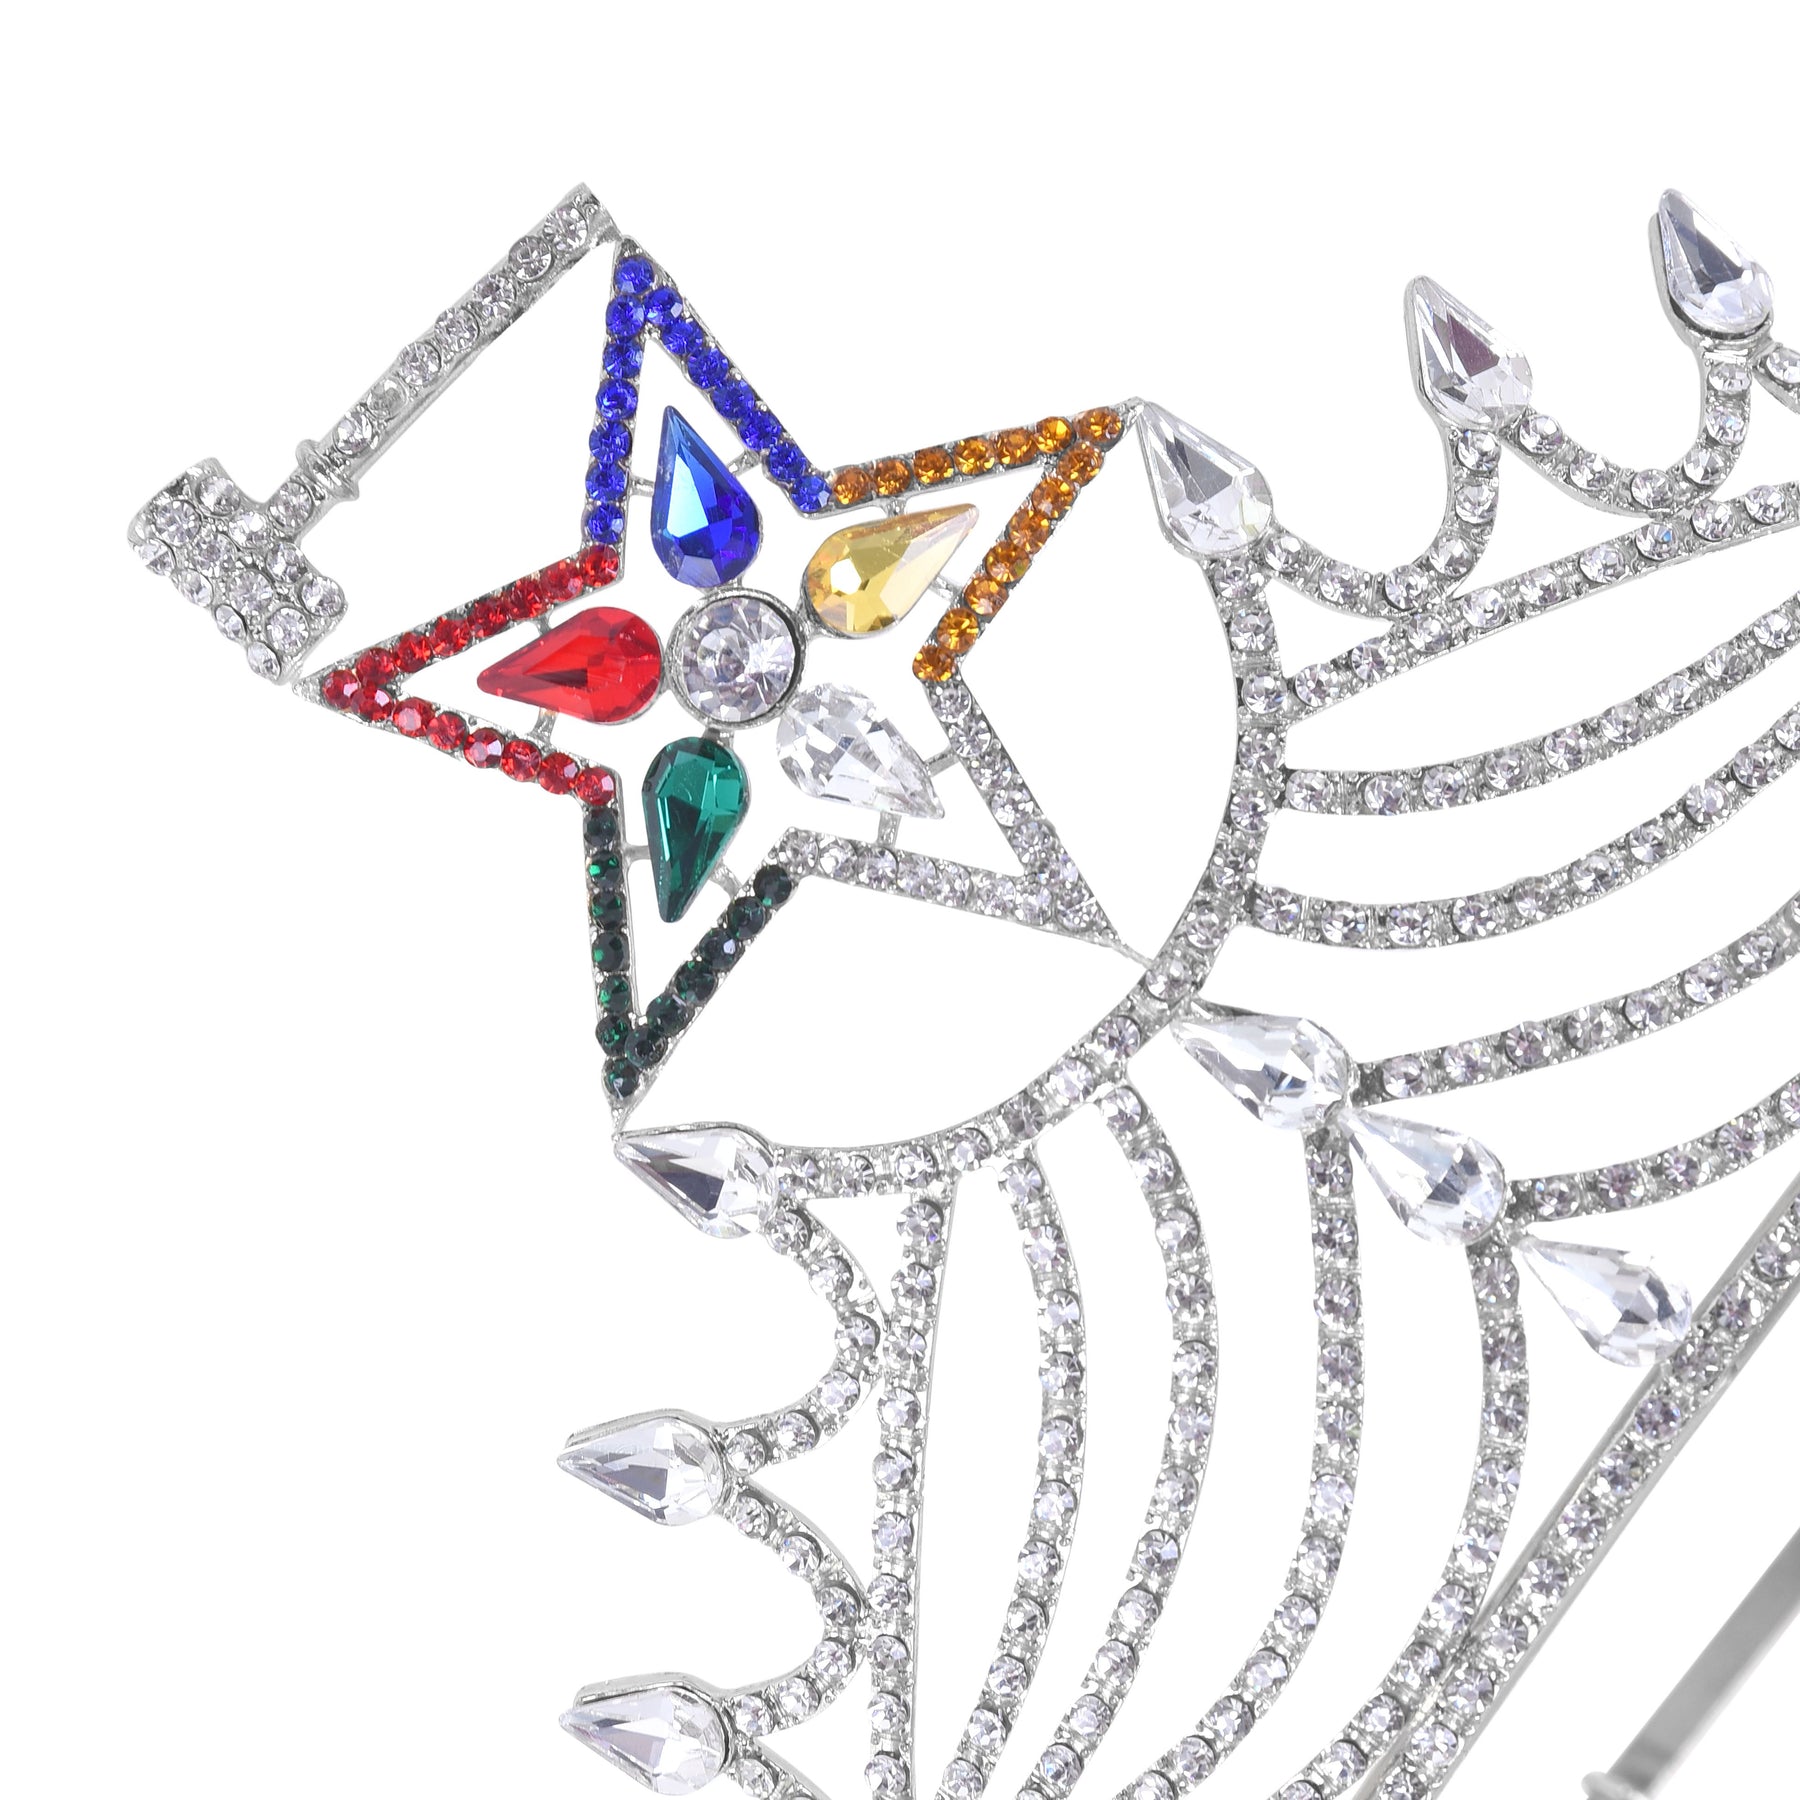 Worthy Matron OES Crown - Silver - Bricks Masons